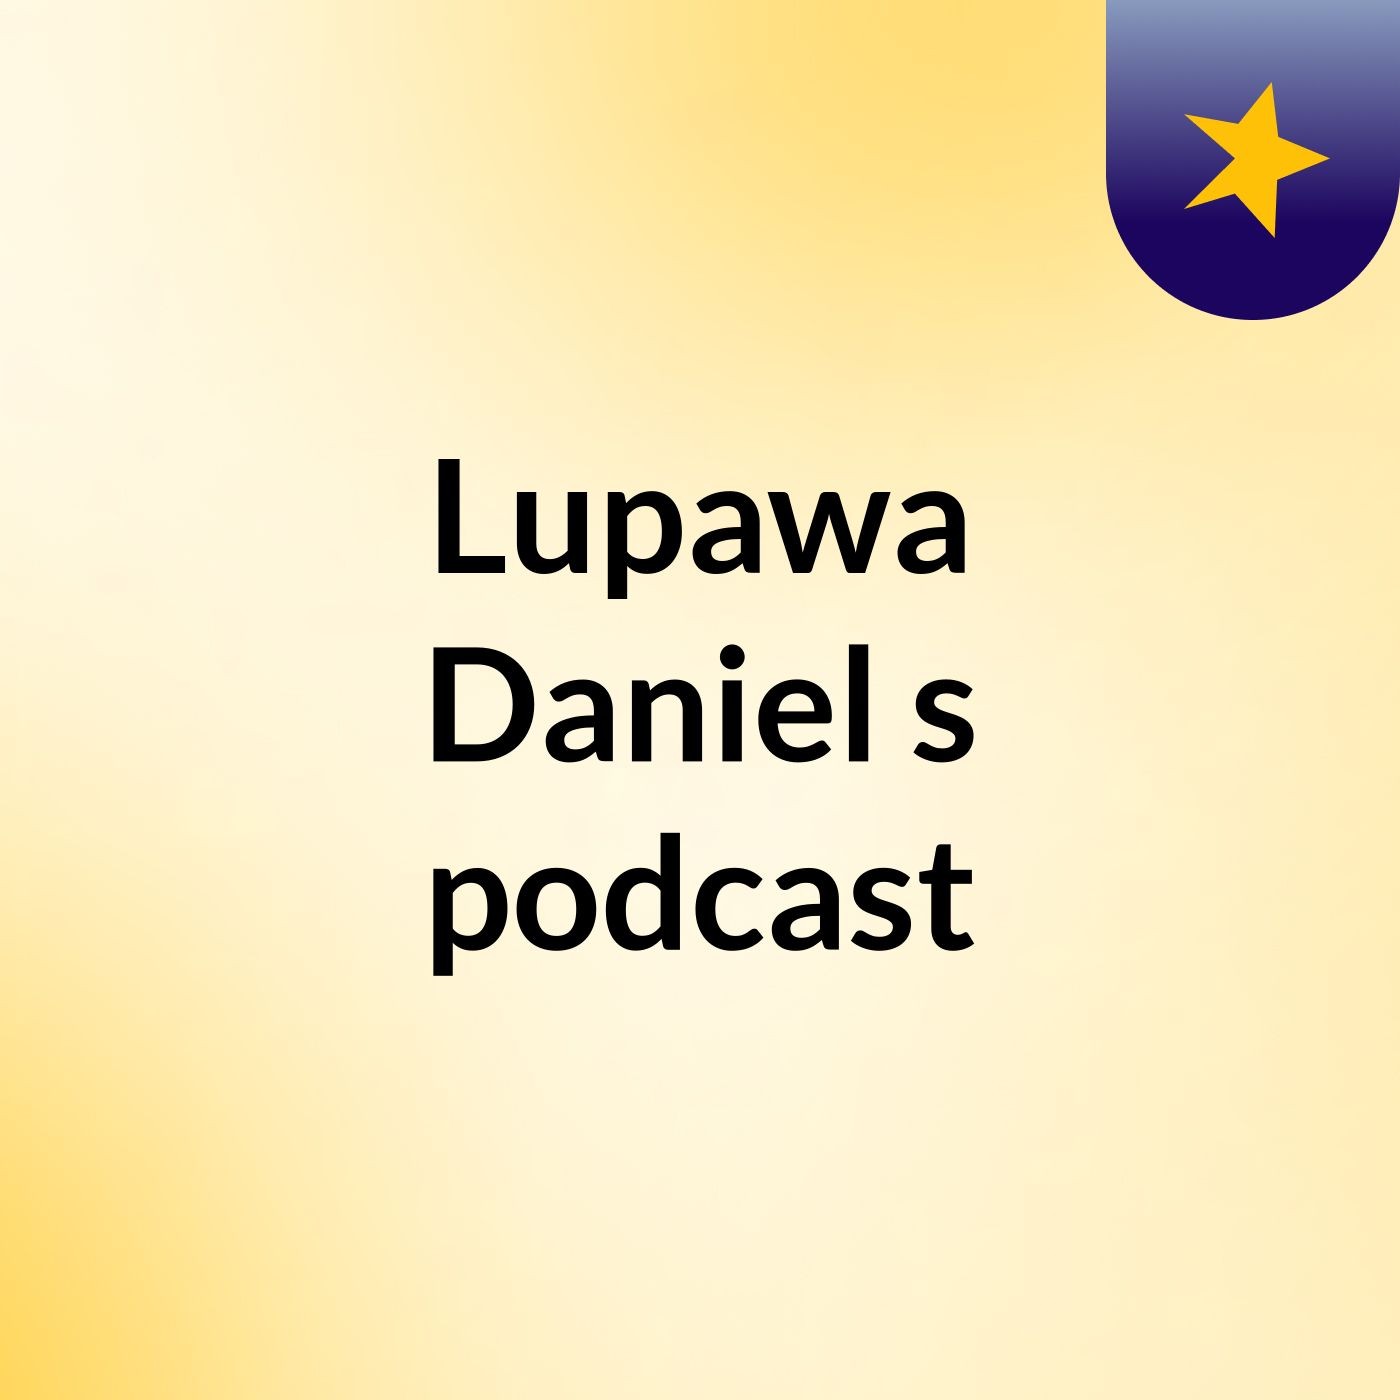 Episode 3 - Lupawa Daniel's podcast